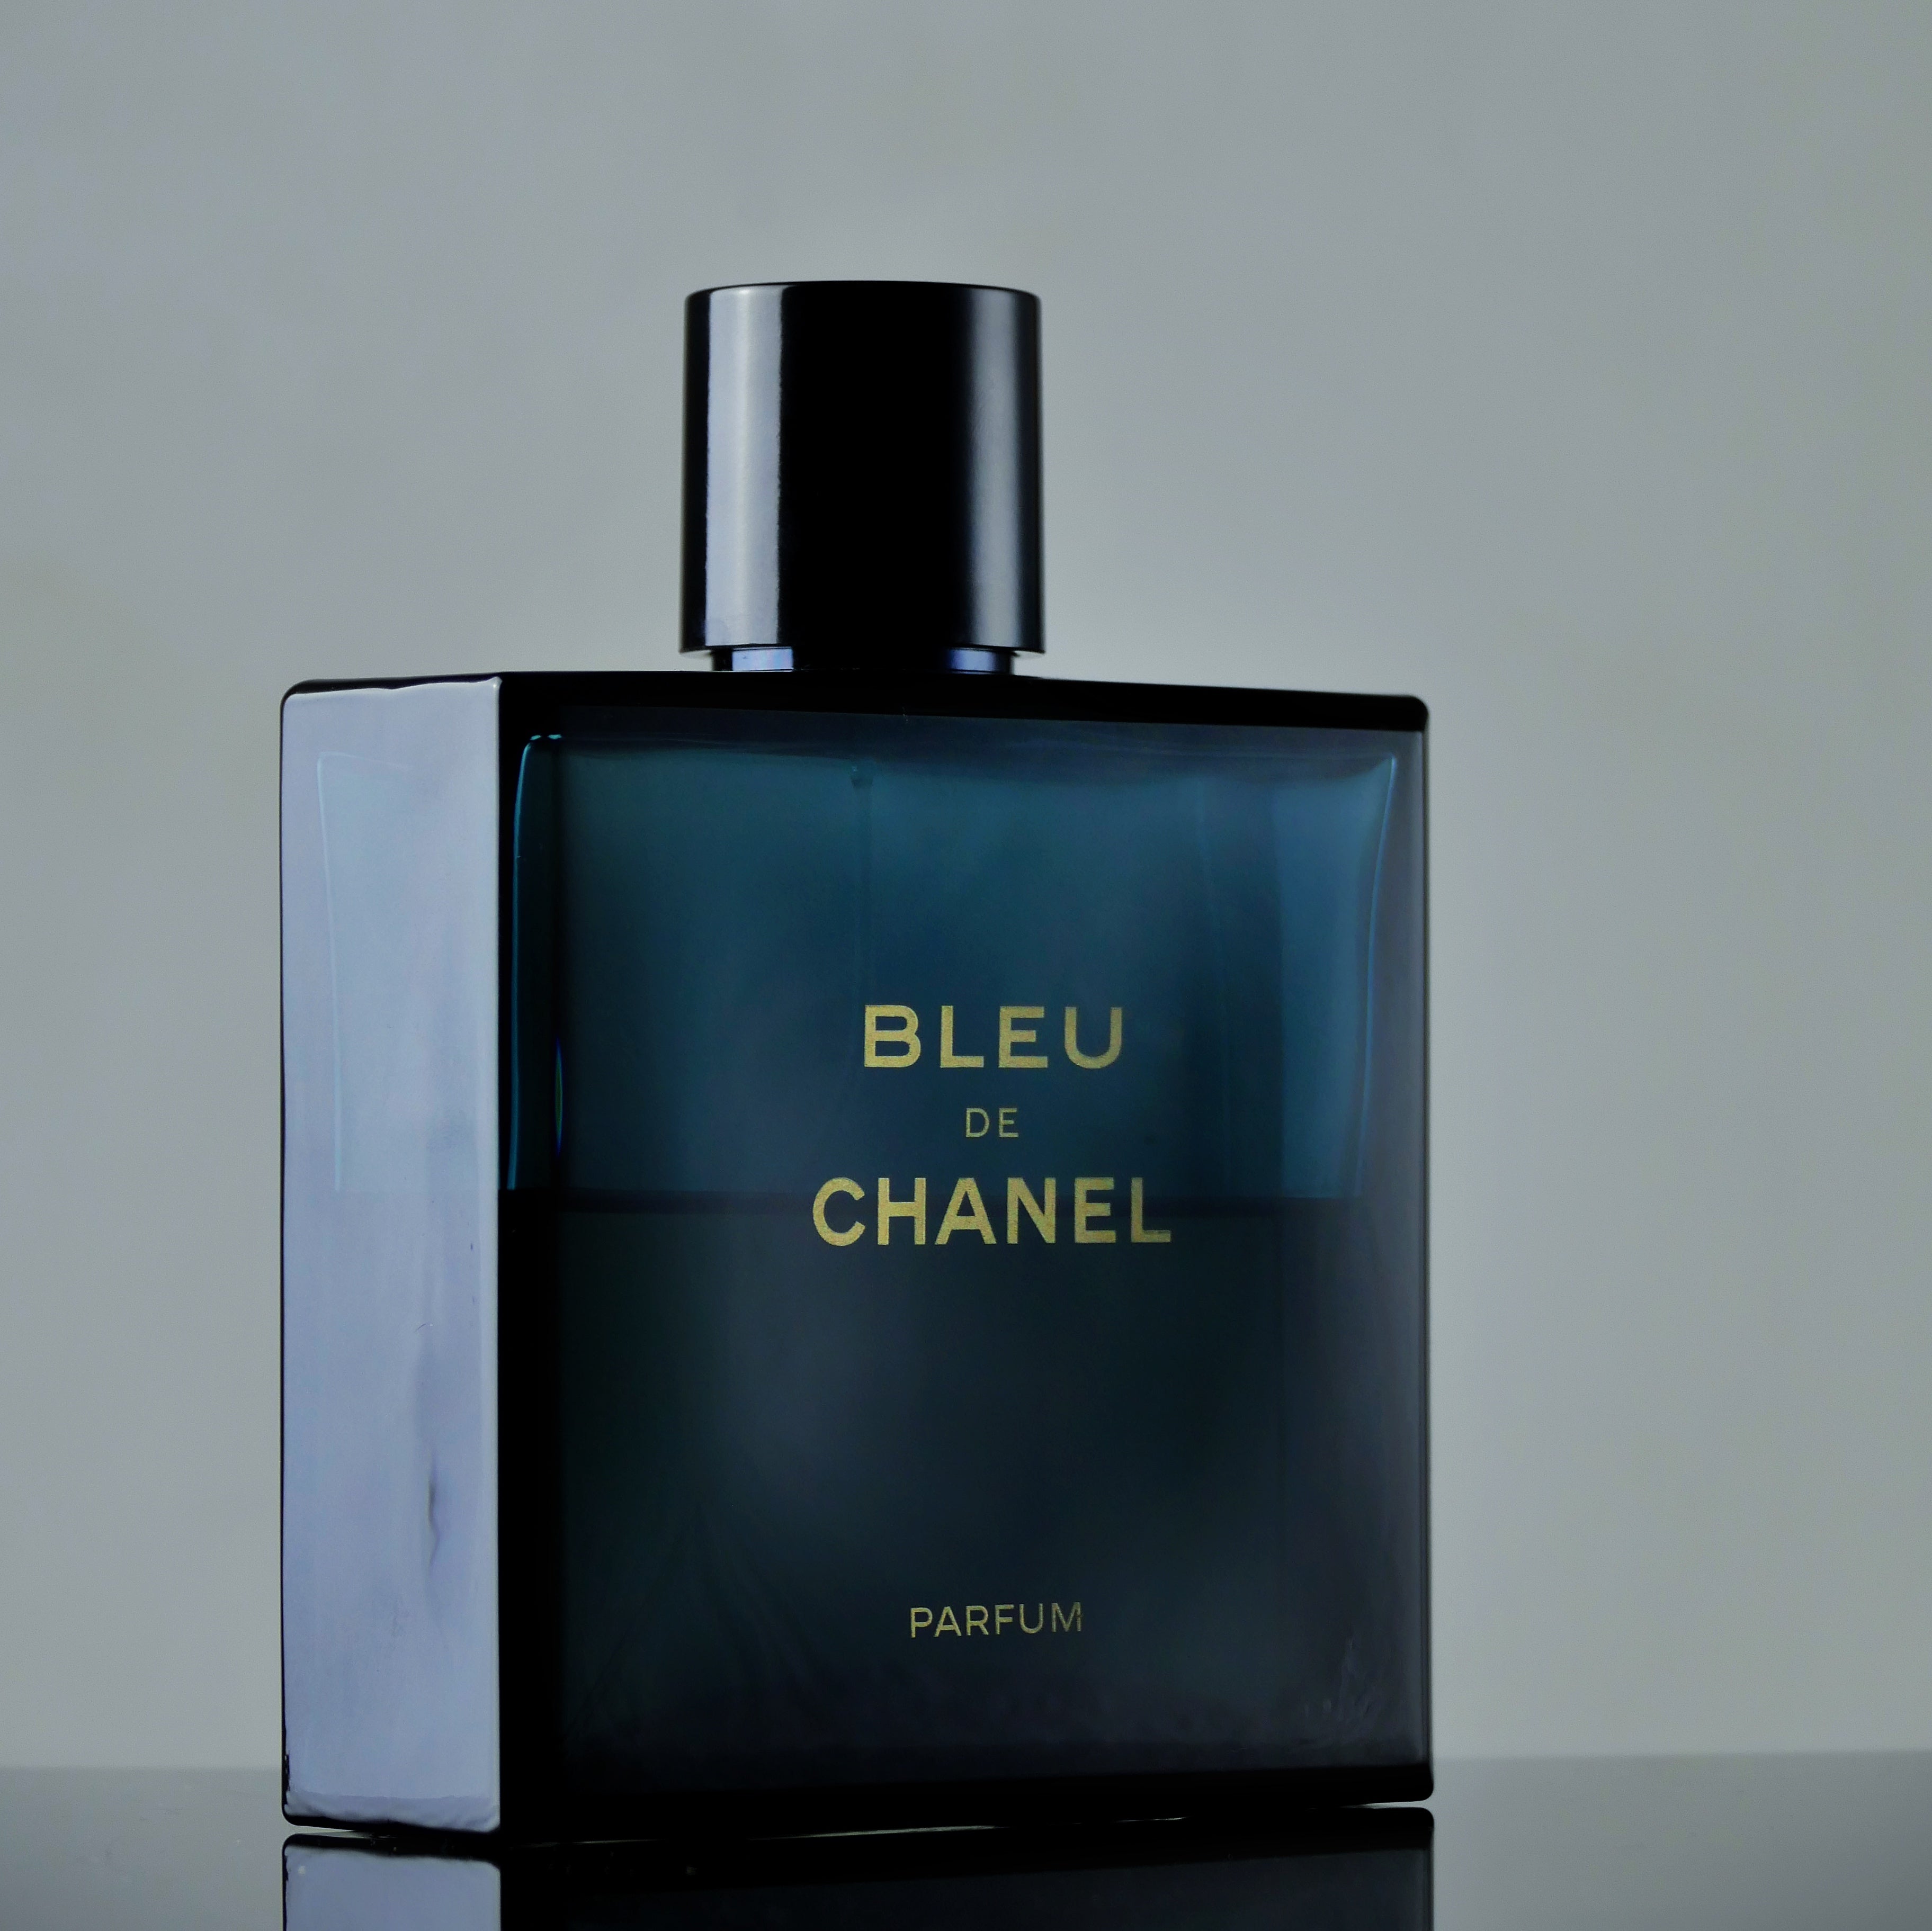 Making Bleu De Chanel for Sample Box! 😊 #fragrance #perfume